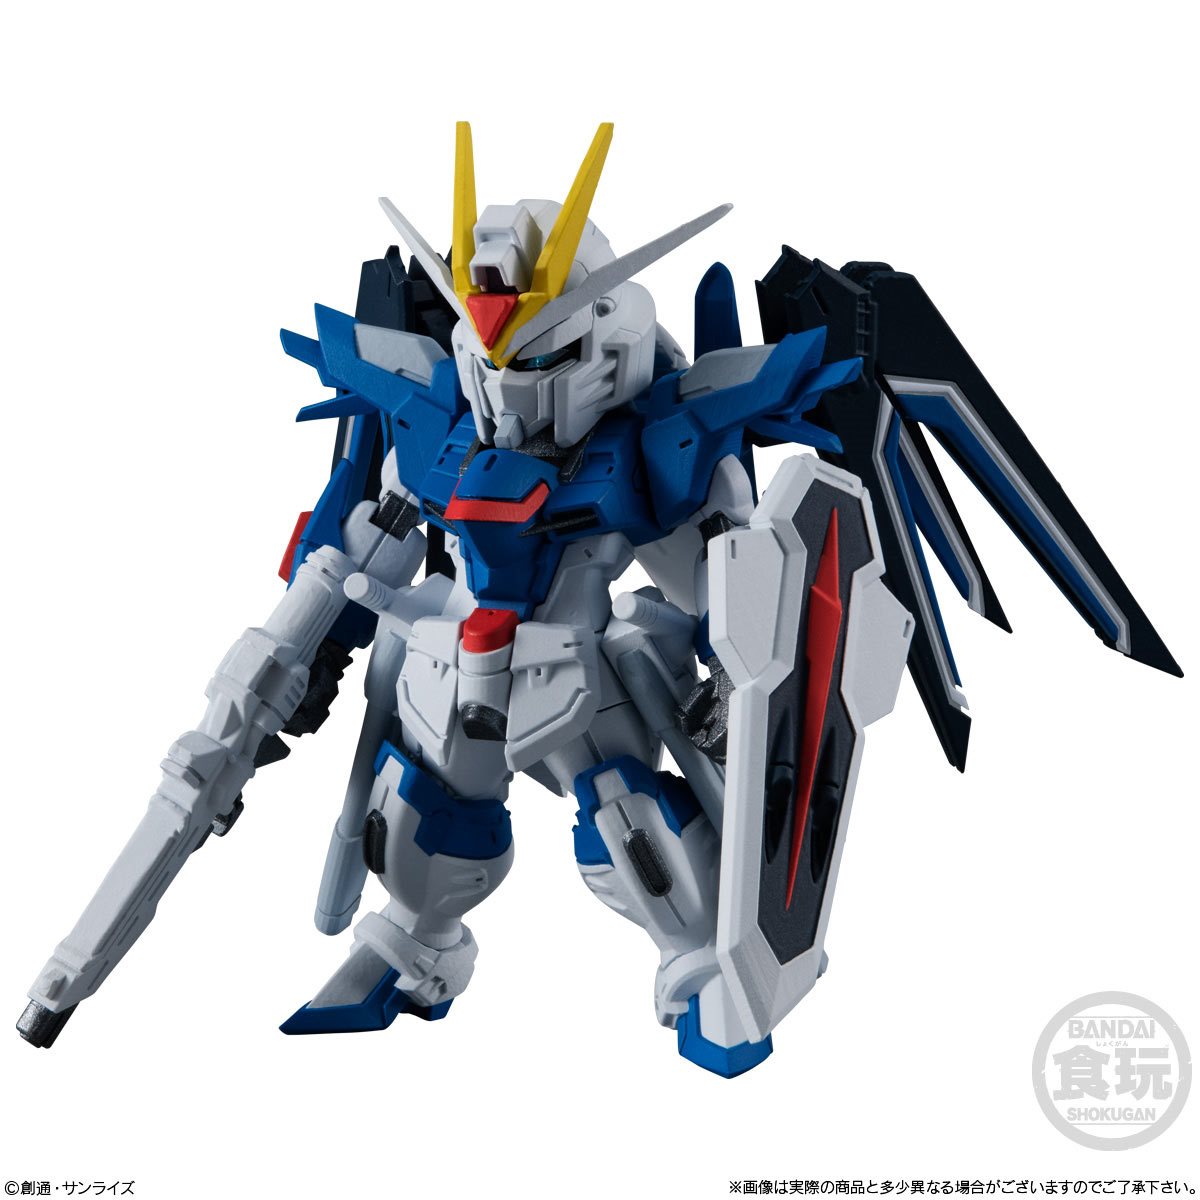 Bandai Shokugan Mini Figure: Mobile Suit Gundam FW - Numero 24 Set Completo